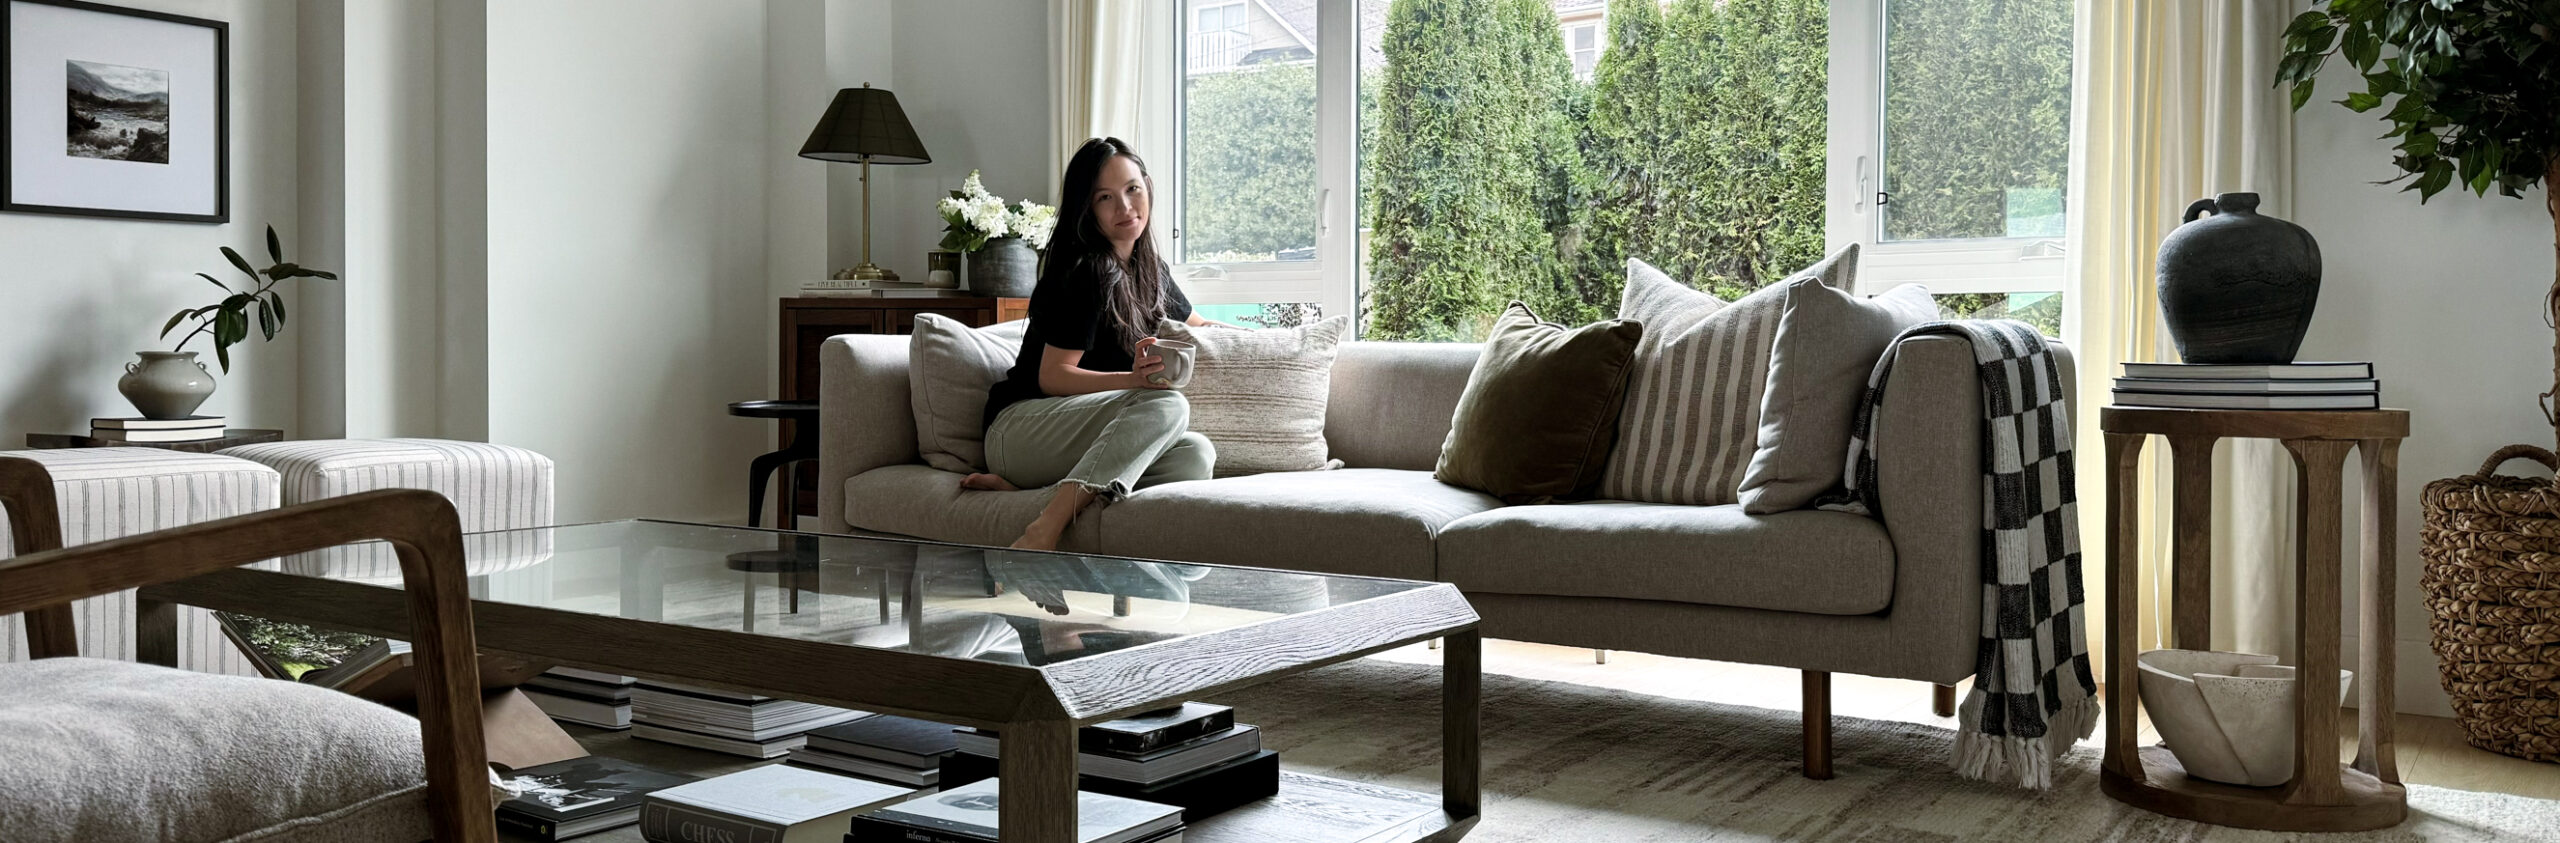 Decor refresh woman sitting on sofa with beautiful home decor around